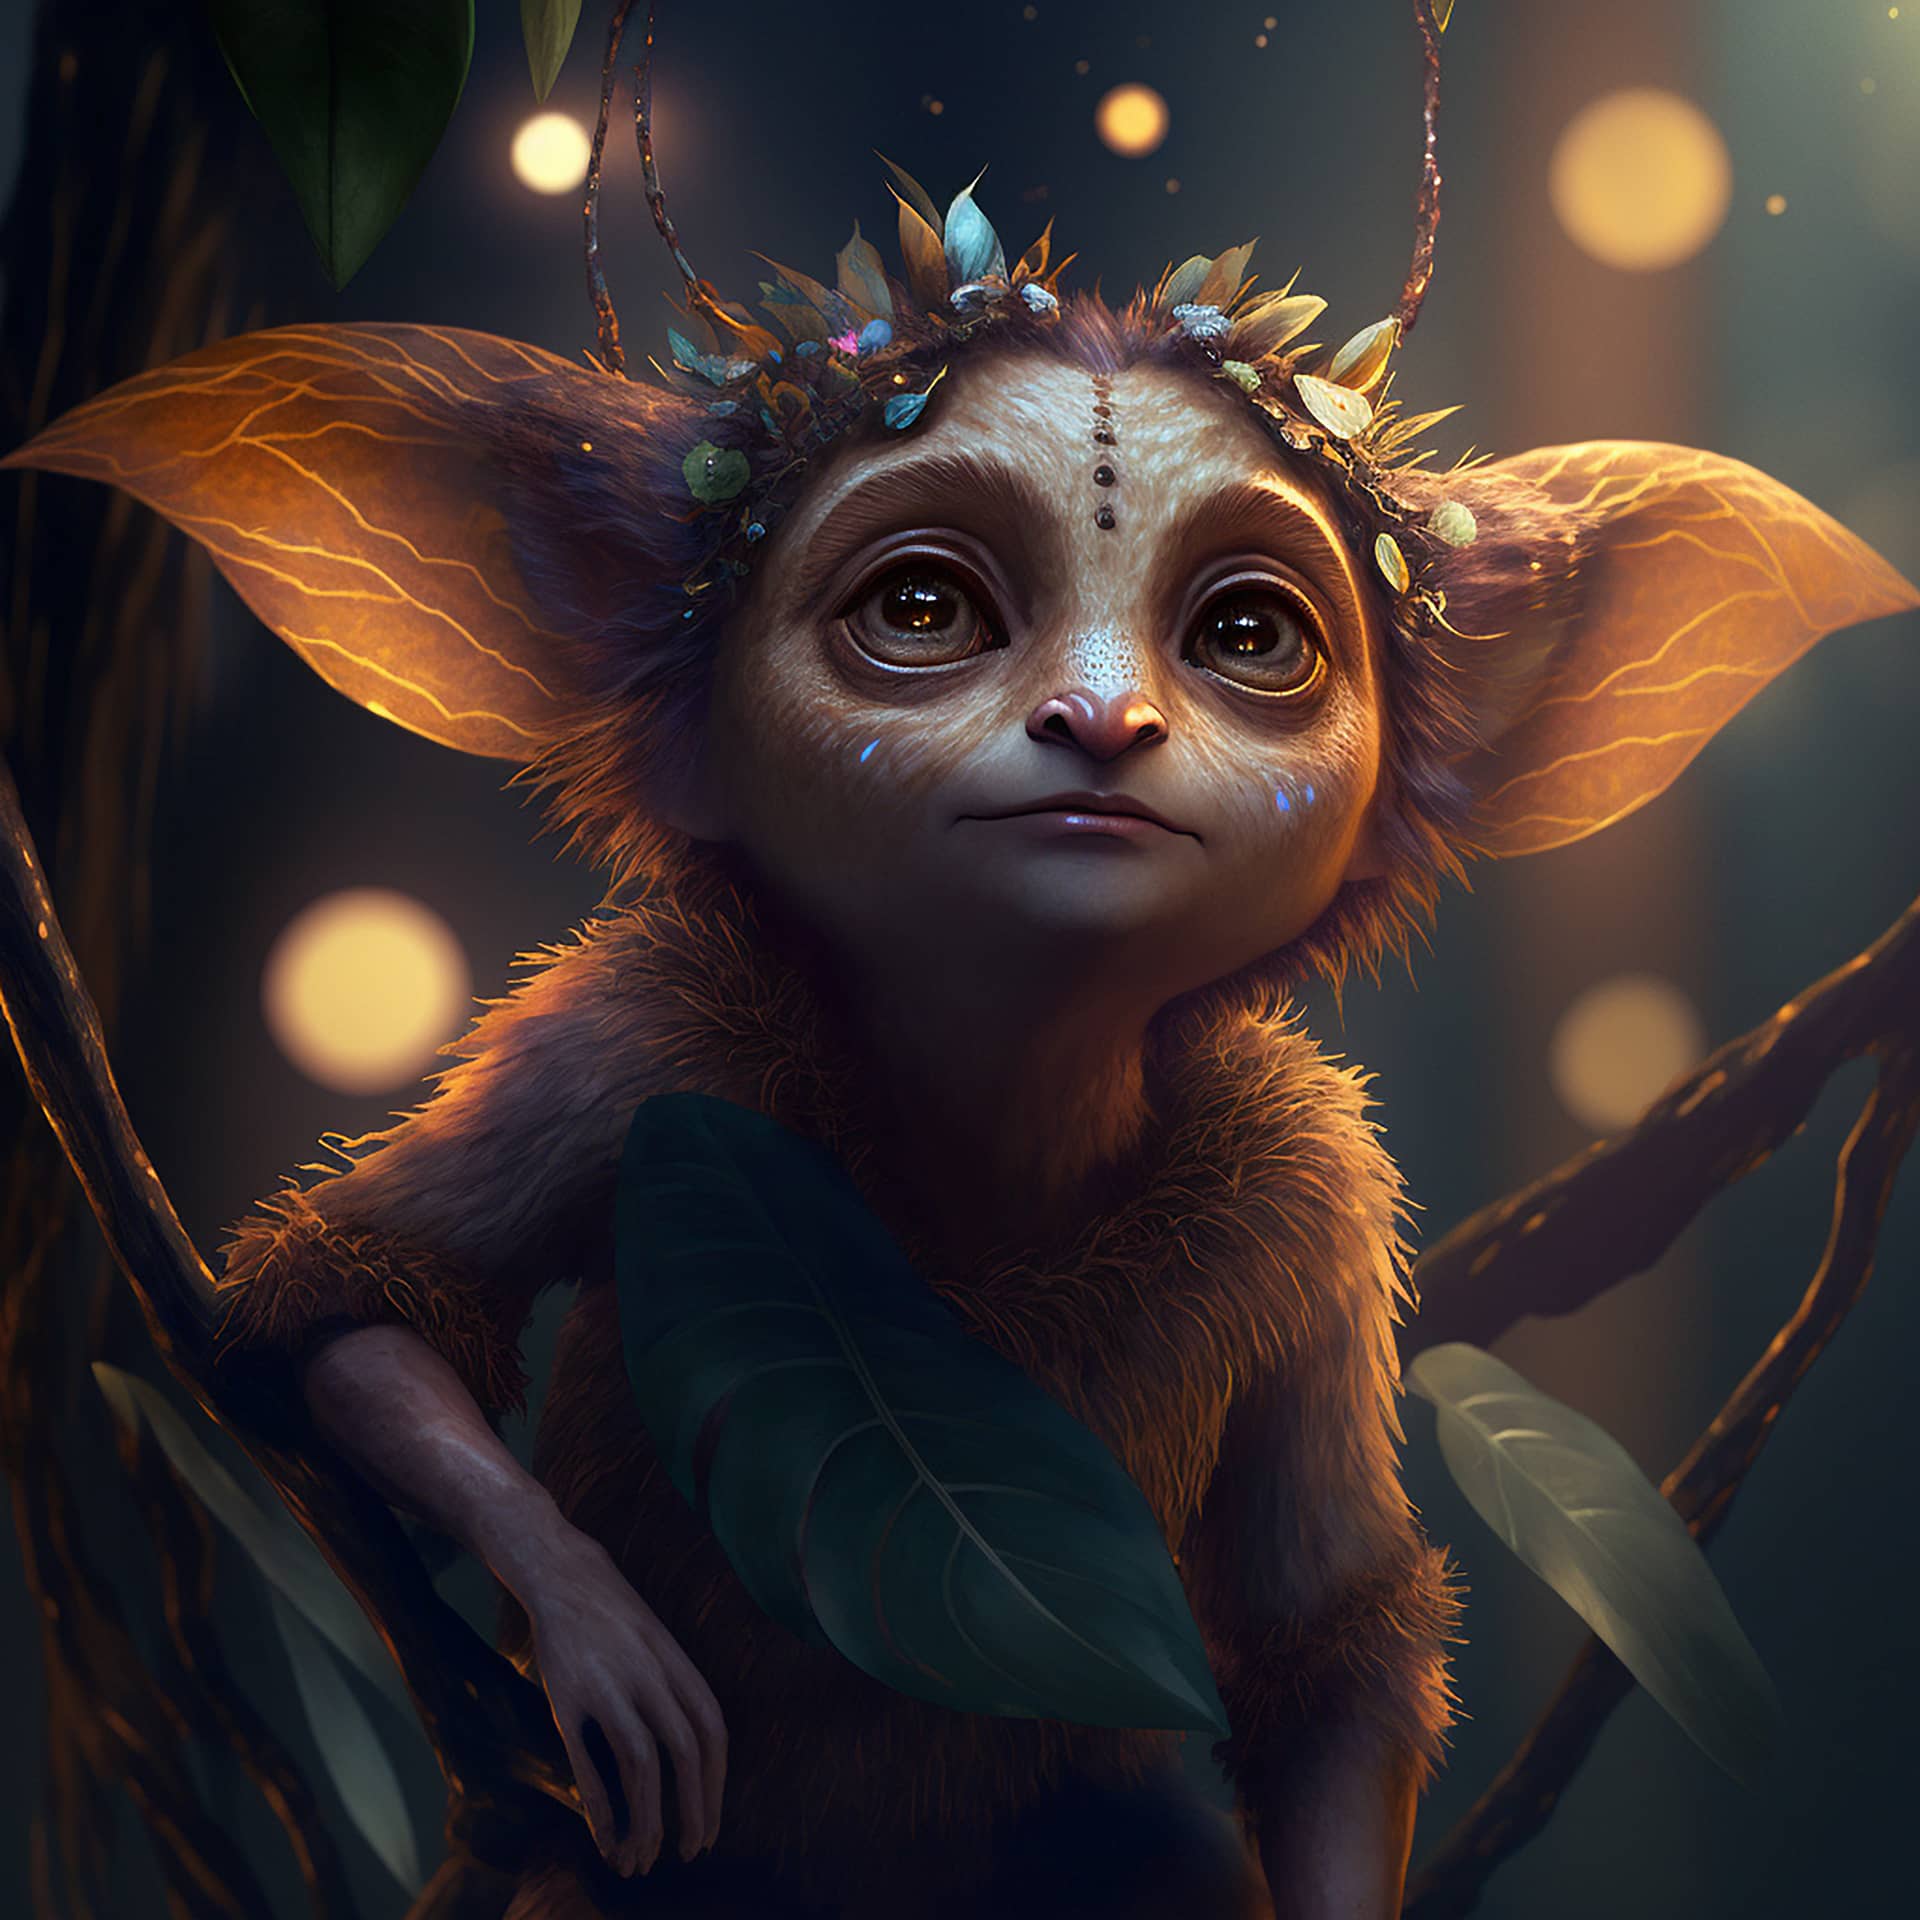 Tiny cute adorable fairy sloth dream profile picture